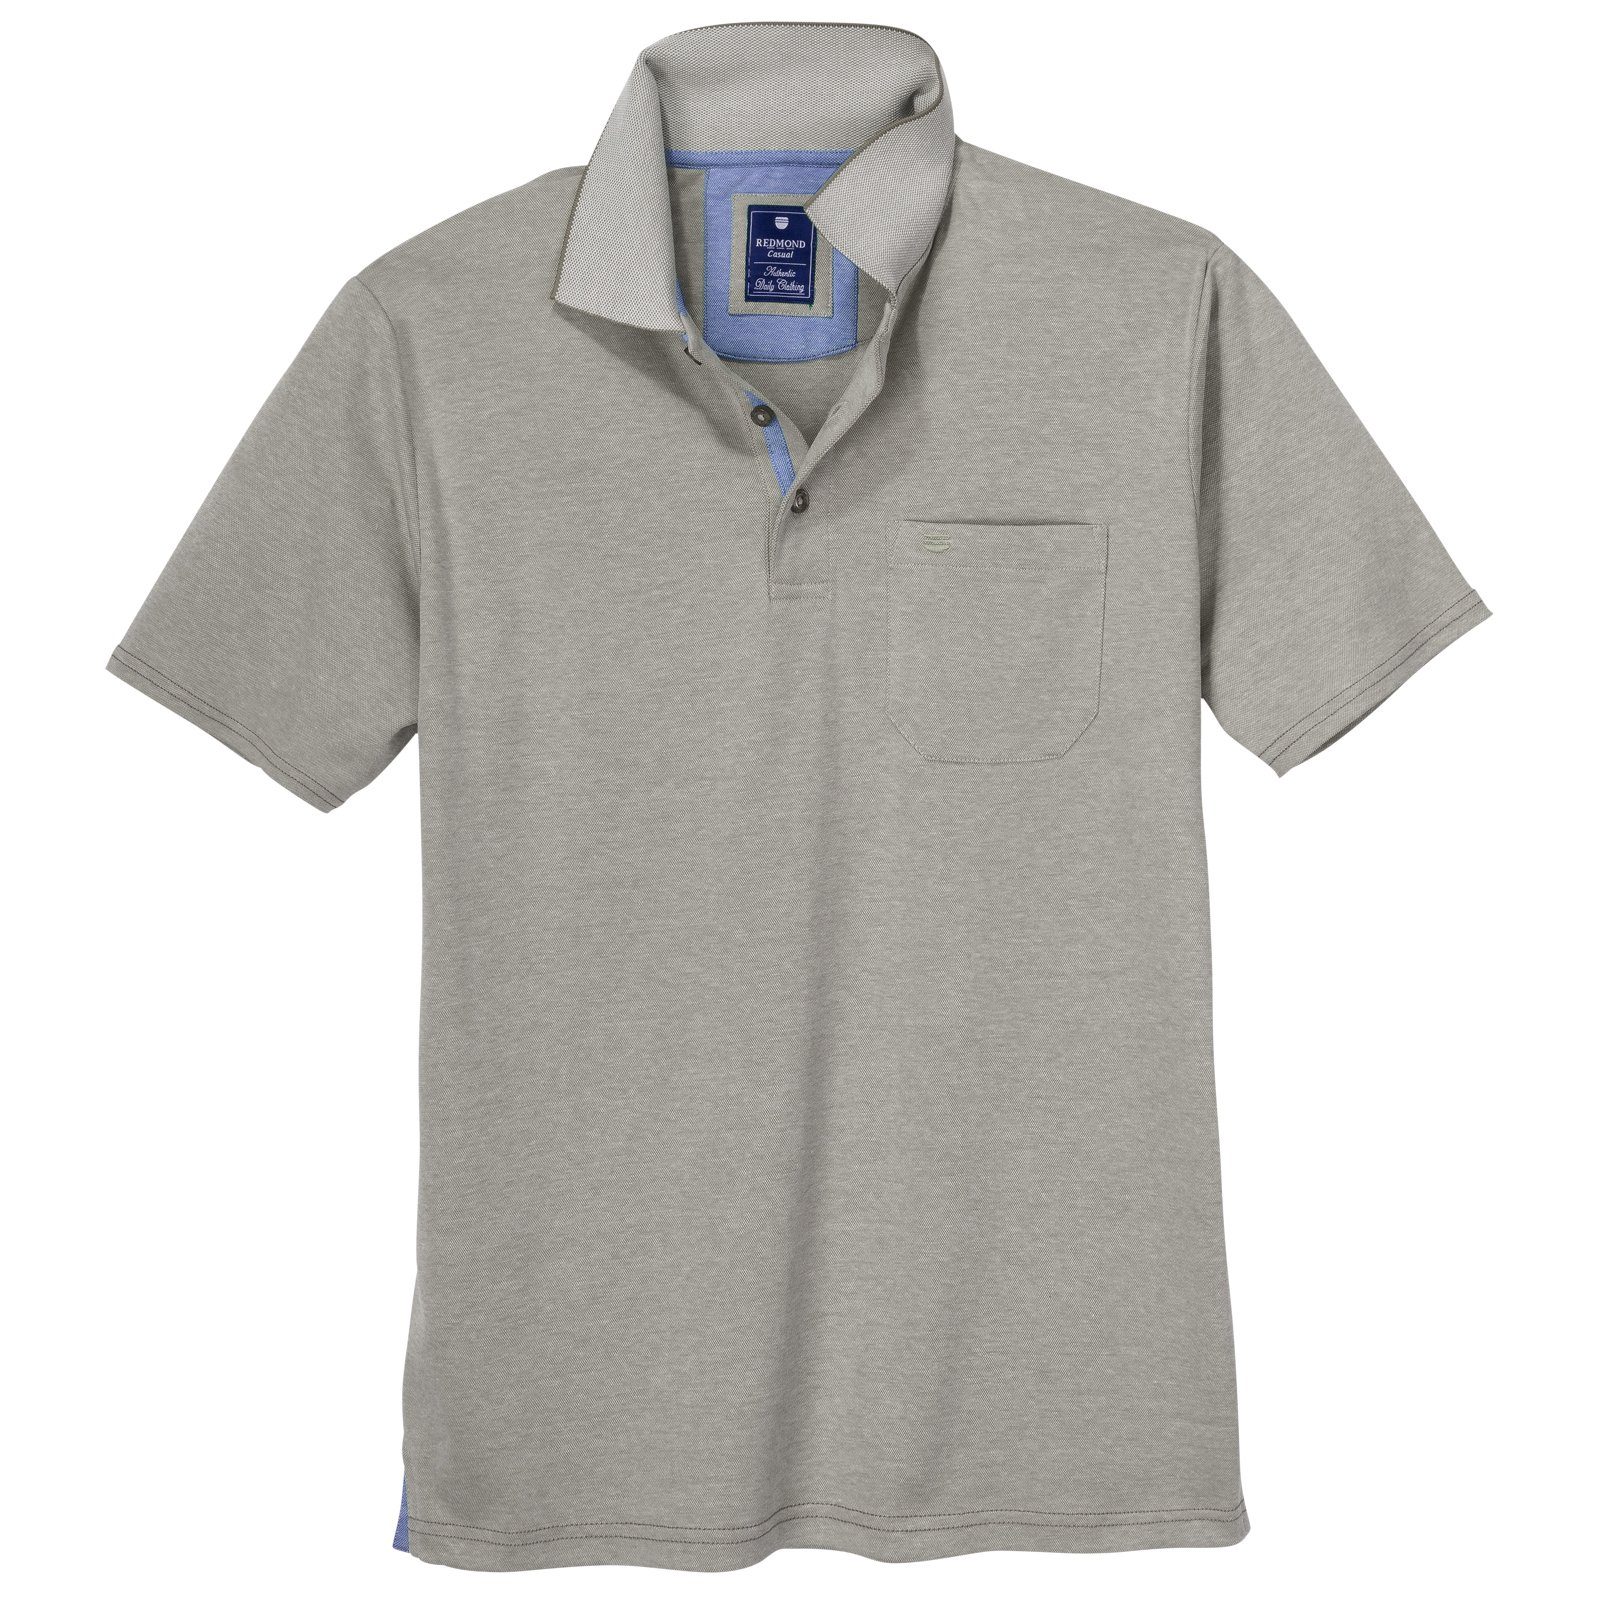 Wear" Redmond braun melange Redmond "Wash & Poloshirt Größen Große Poloshirt